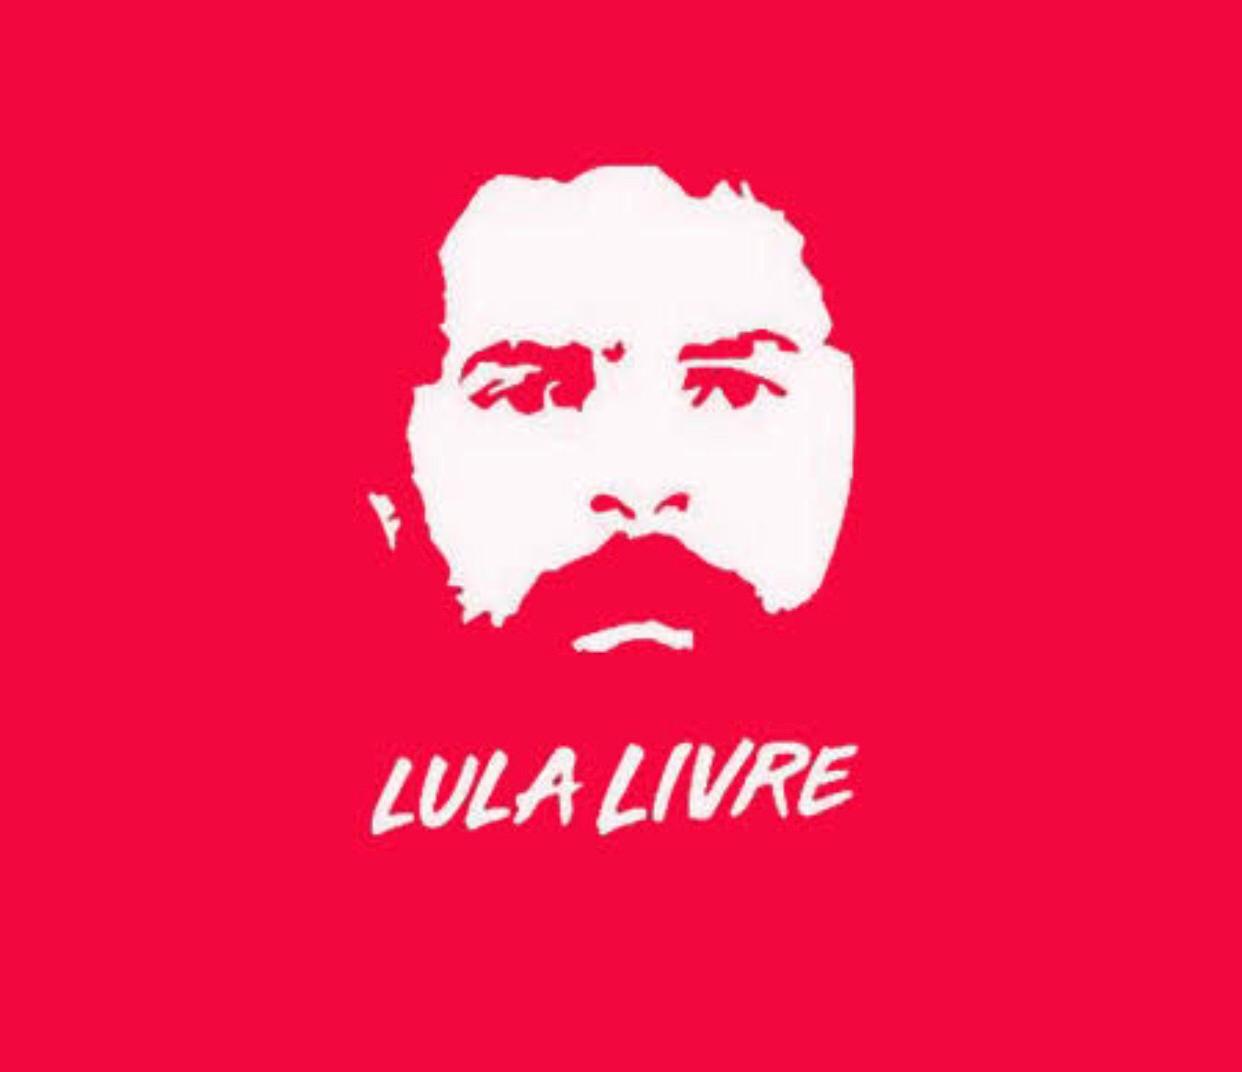 Brasil Quer Lula Livre!